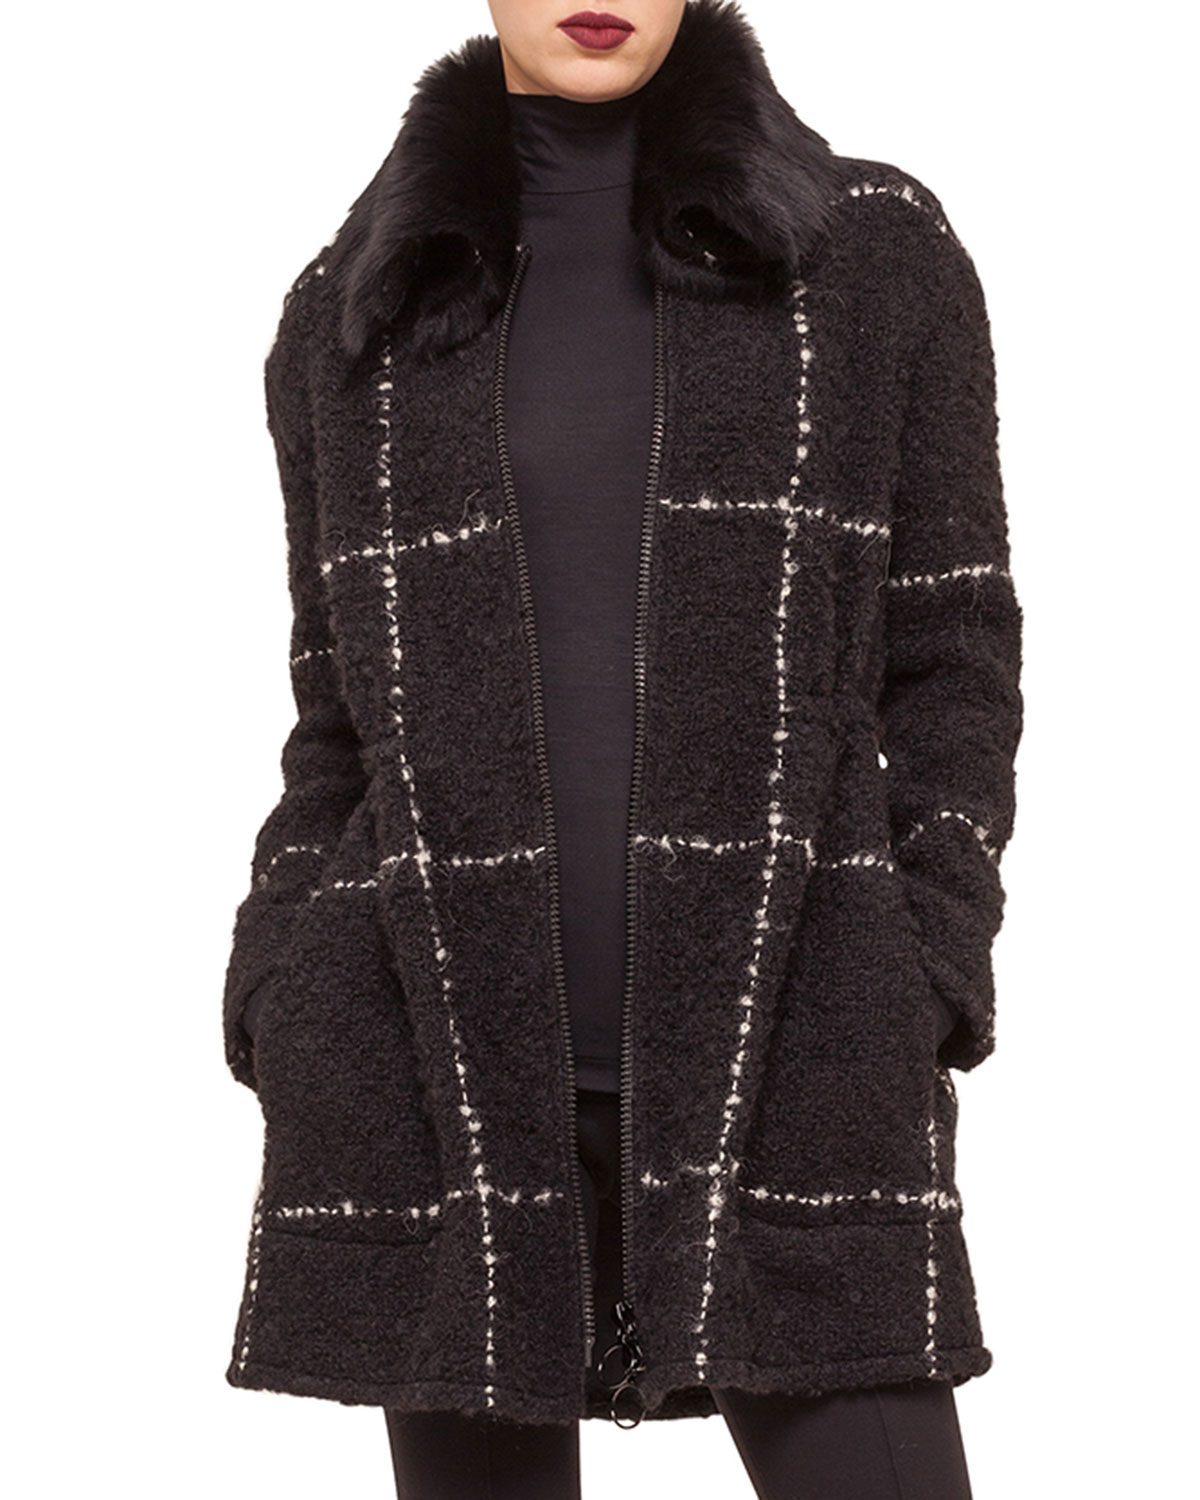 Lyst - Akris Punto Shearling Fur-collar Windowpane Check Coat in Black